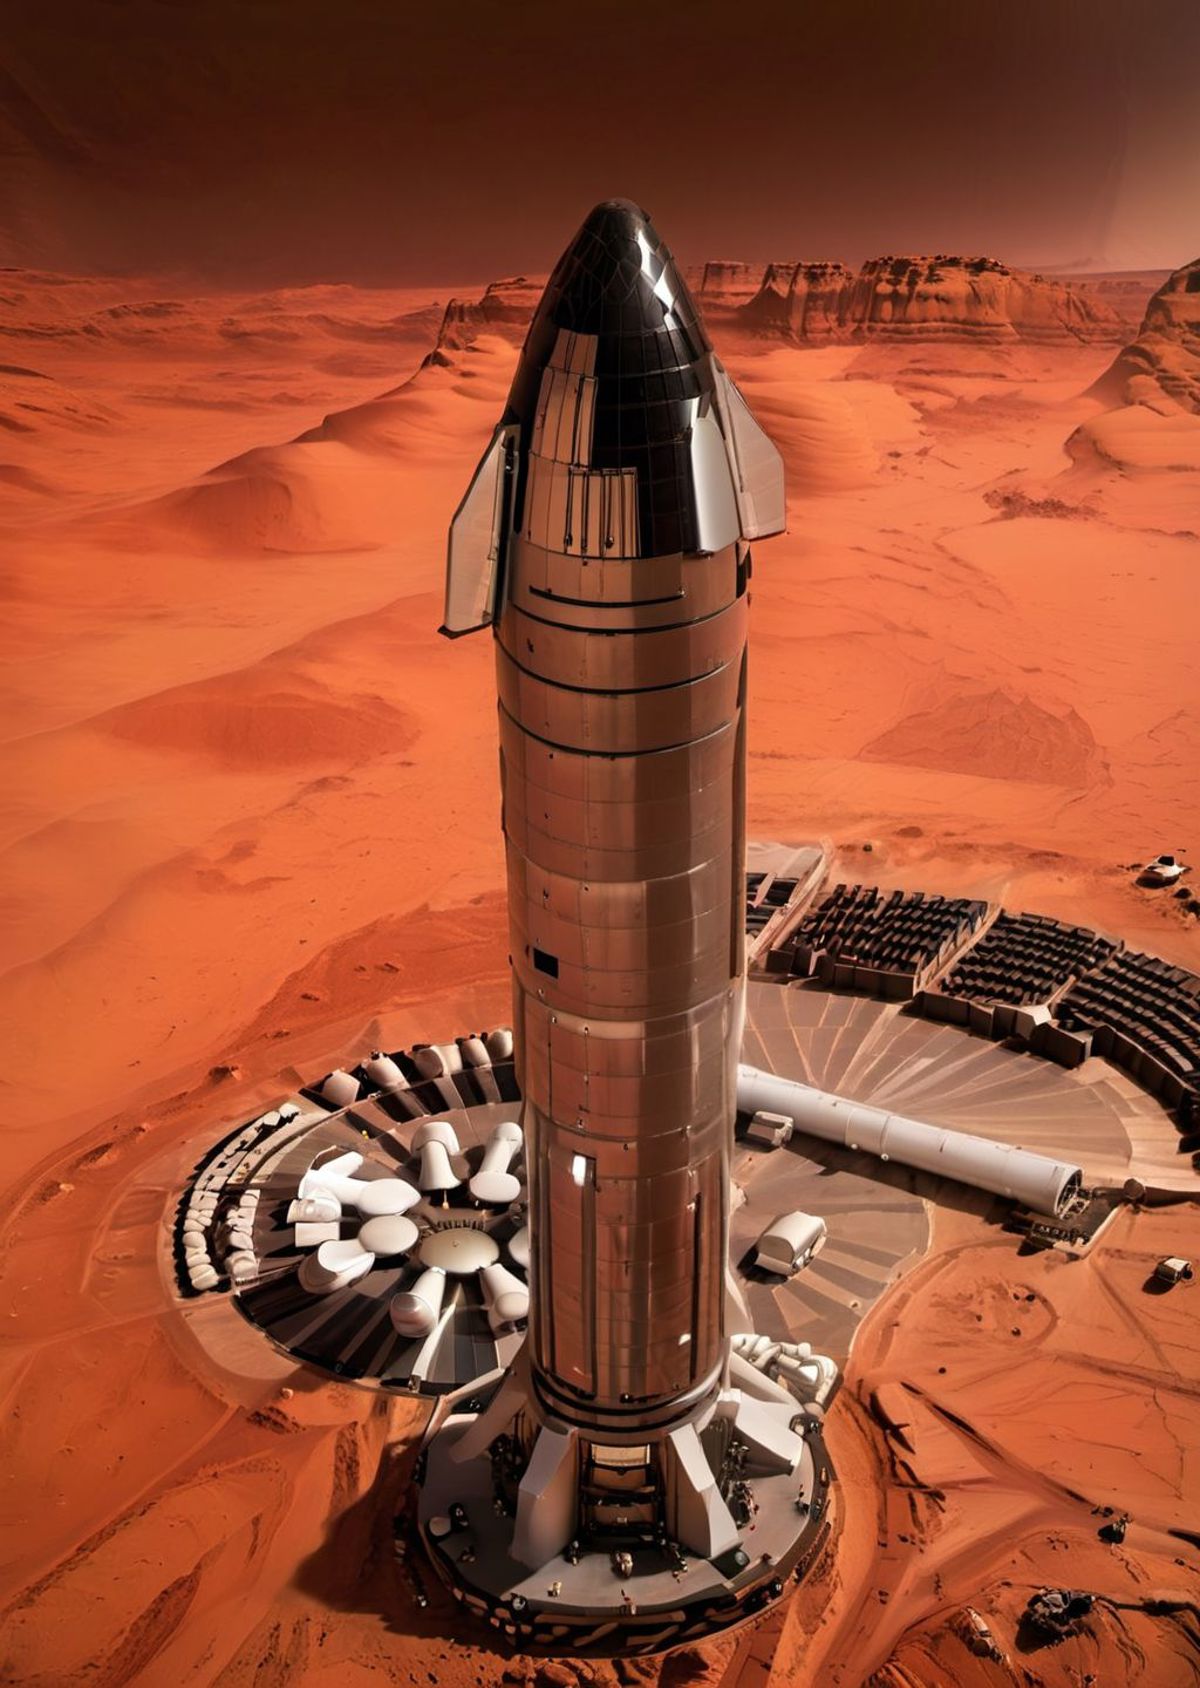 Starship - Interplanetary Transport Vehicle image by AshMartian